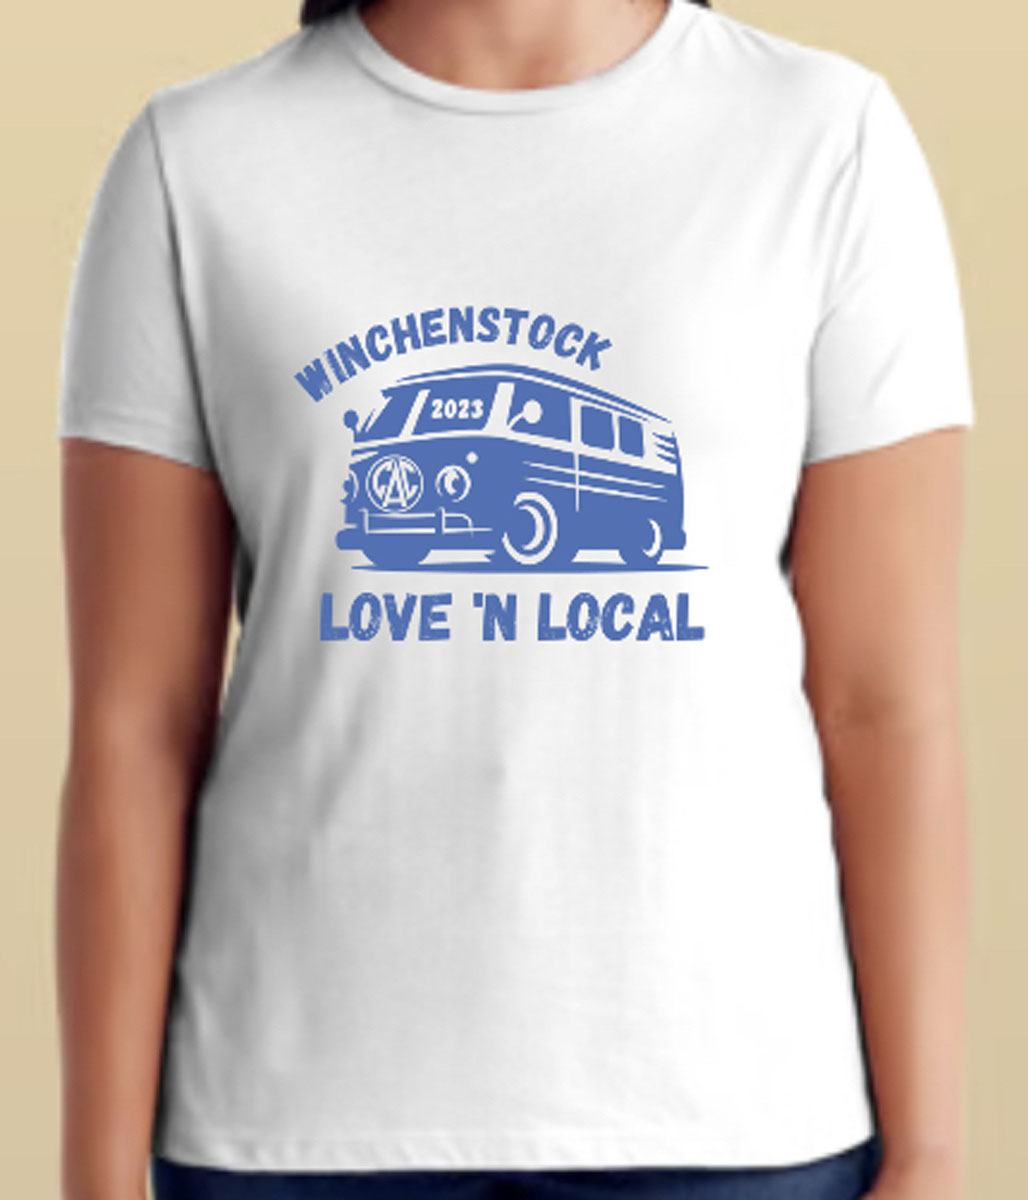 Winchenstock 23 t-shirt